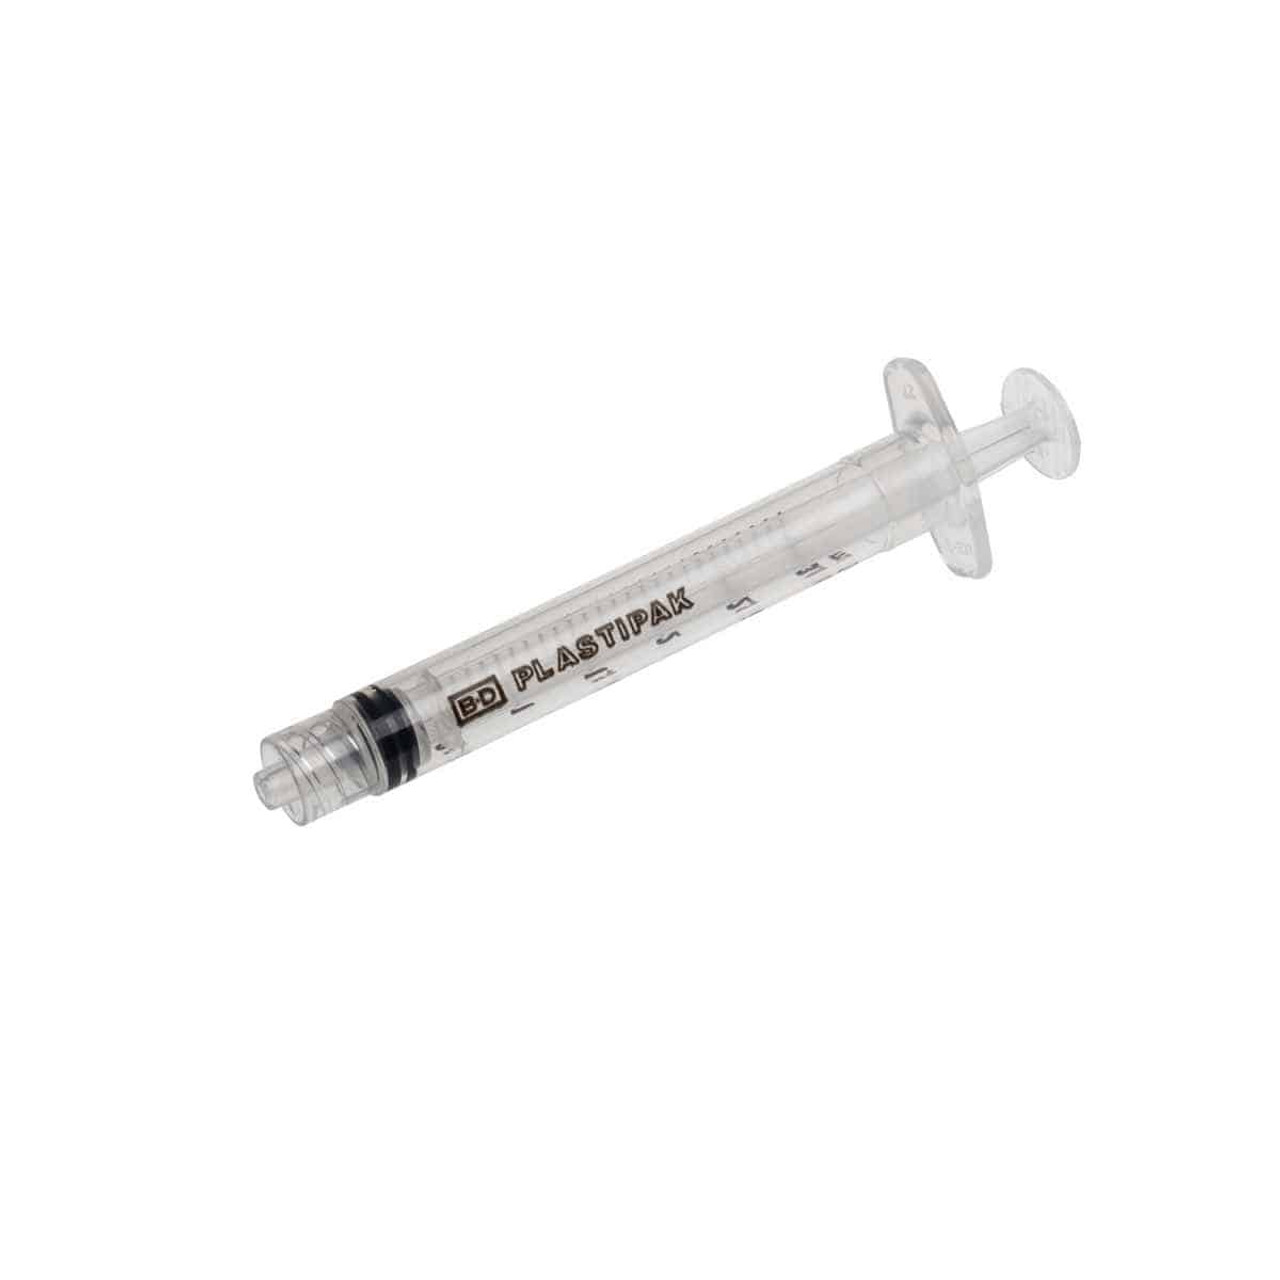 BD Plastipak syringe 3ml 3-piece luer-lock 200 pieces